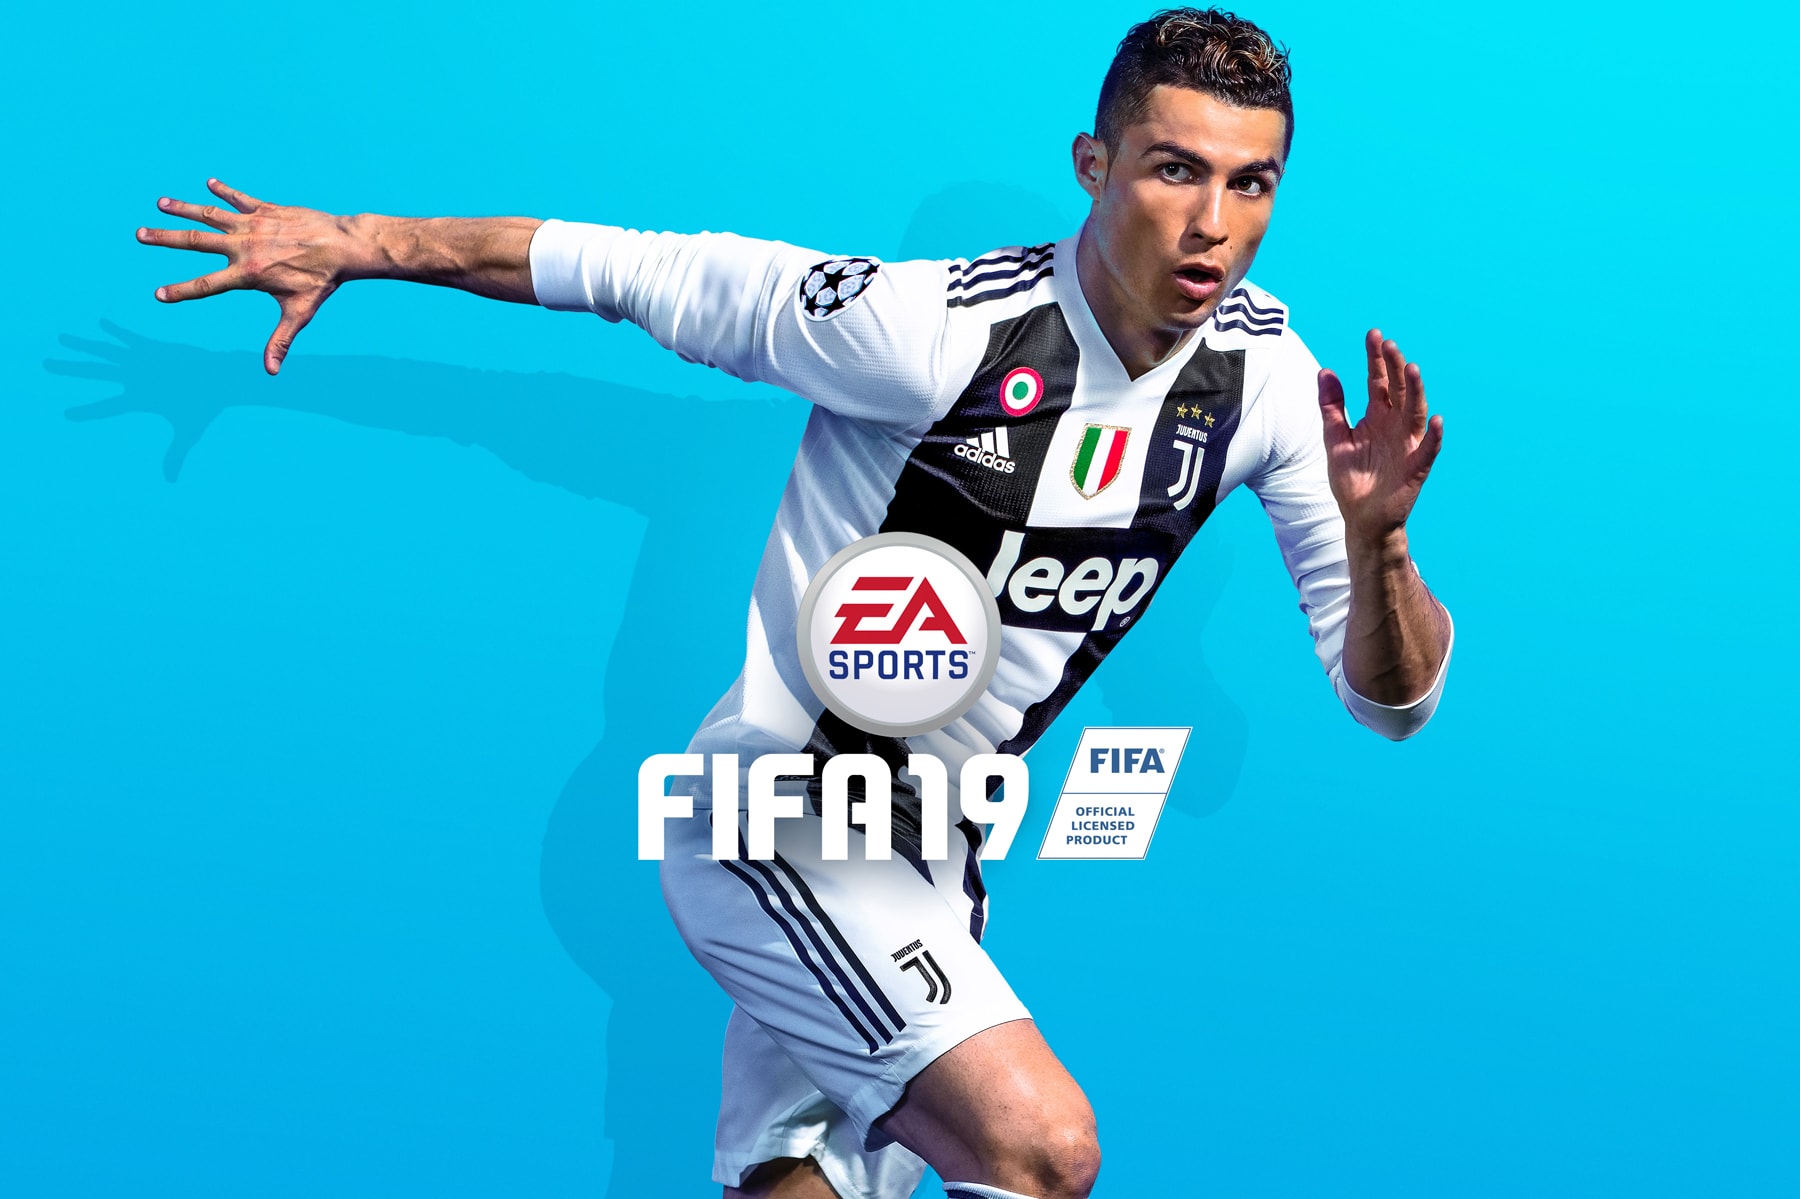 Cristiano Ronaldo 終於在《FIFA 19》正式版封面中換上 Juventus 球衣